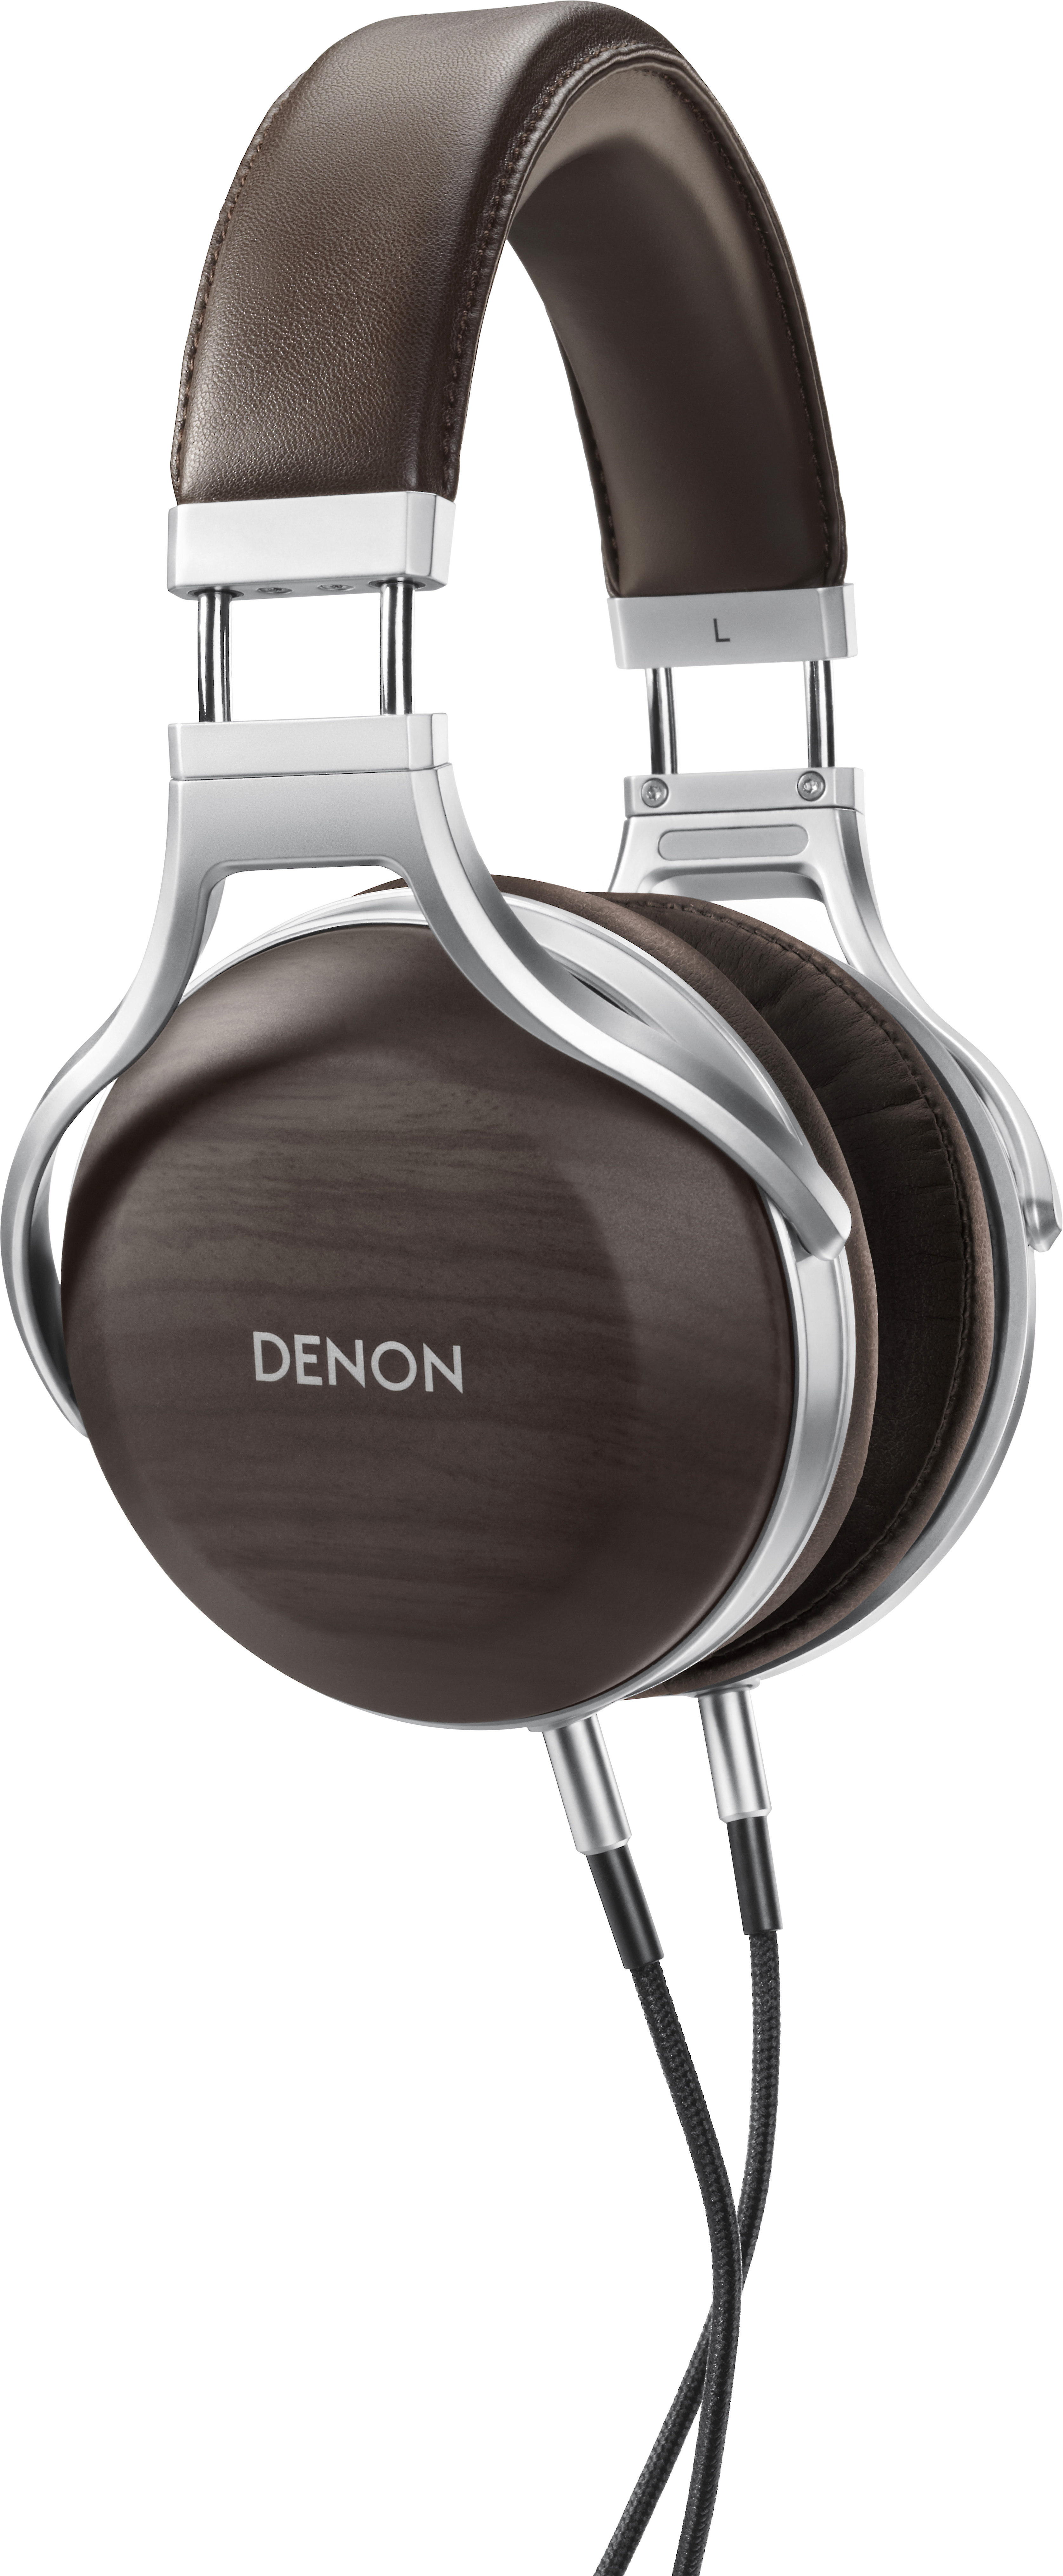 Customer Reviews: Denon AH-D5200 Over-ear zebrawood headphones at